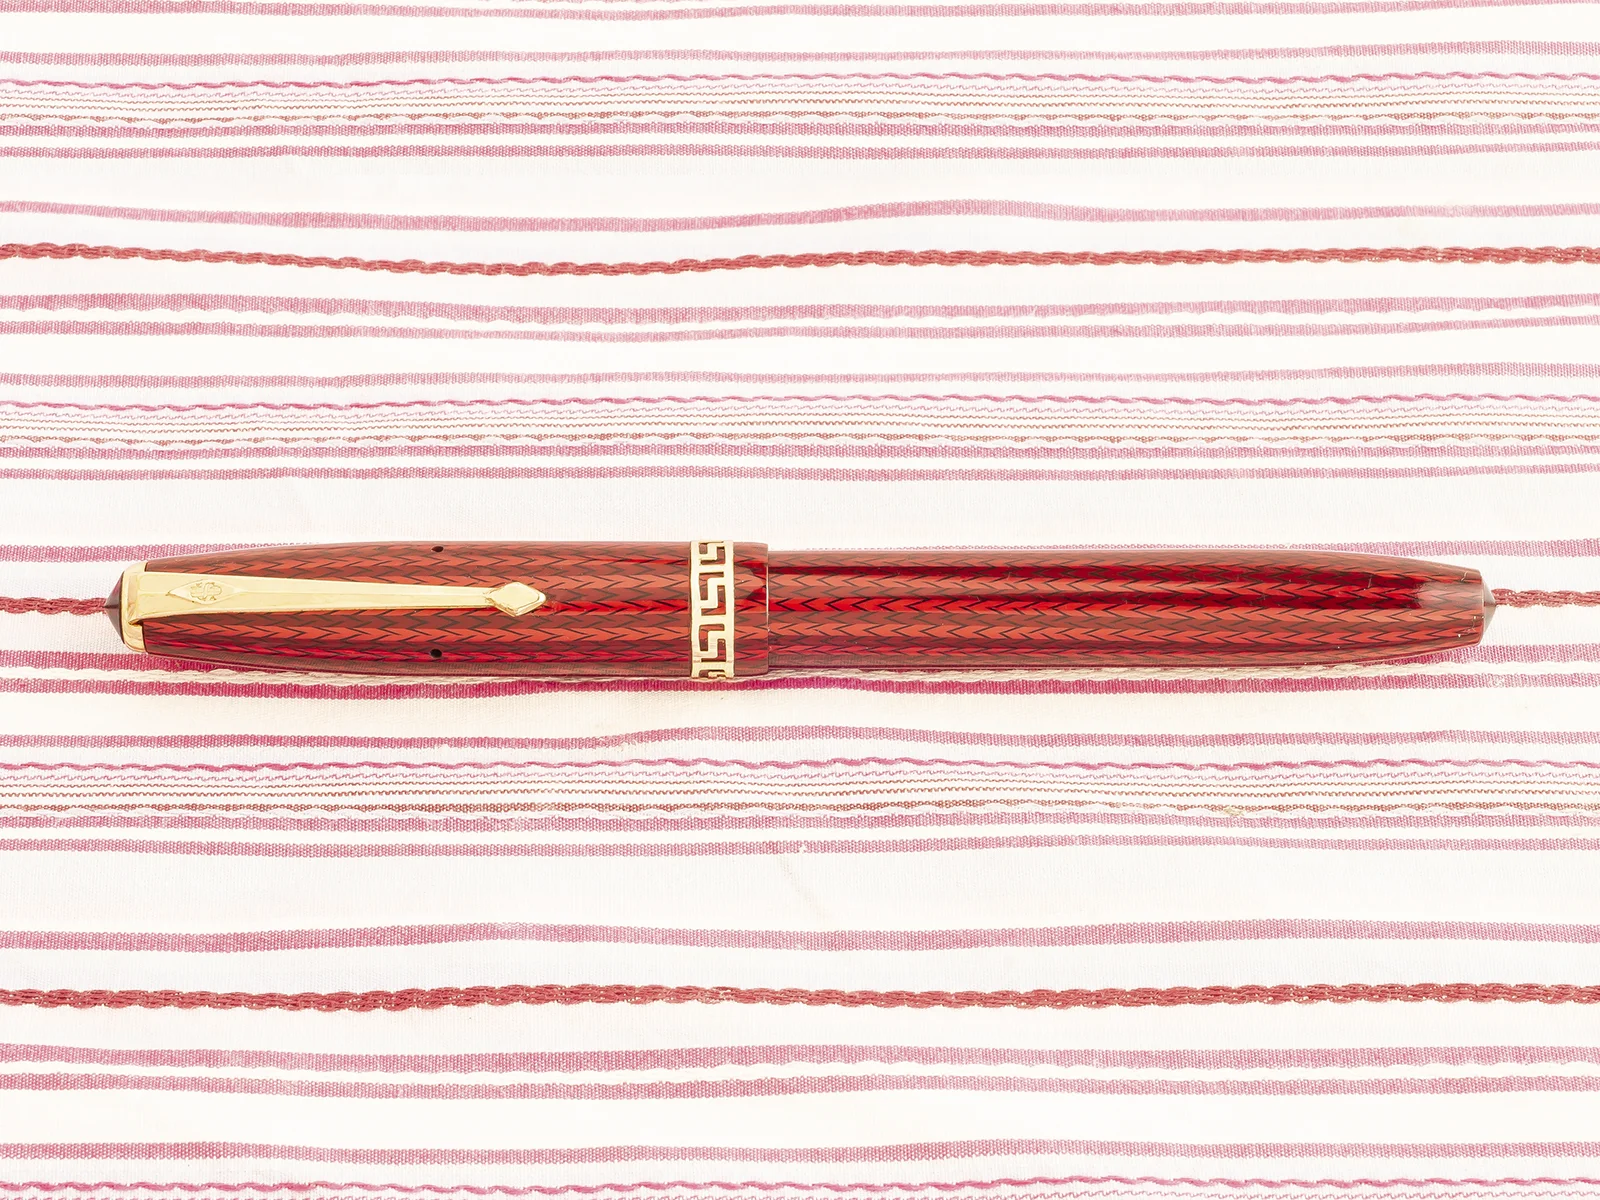 vintage conway stewart 74 red herringbone grecian capband fountain pen